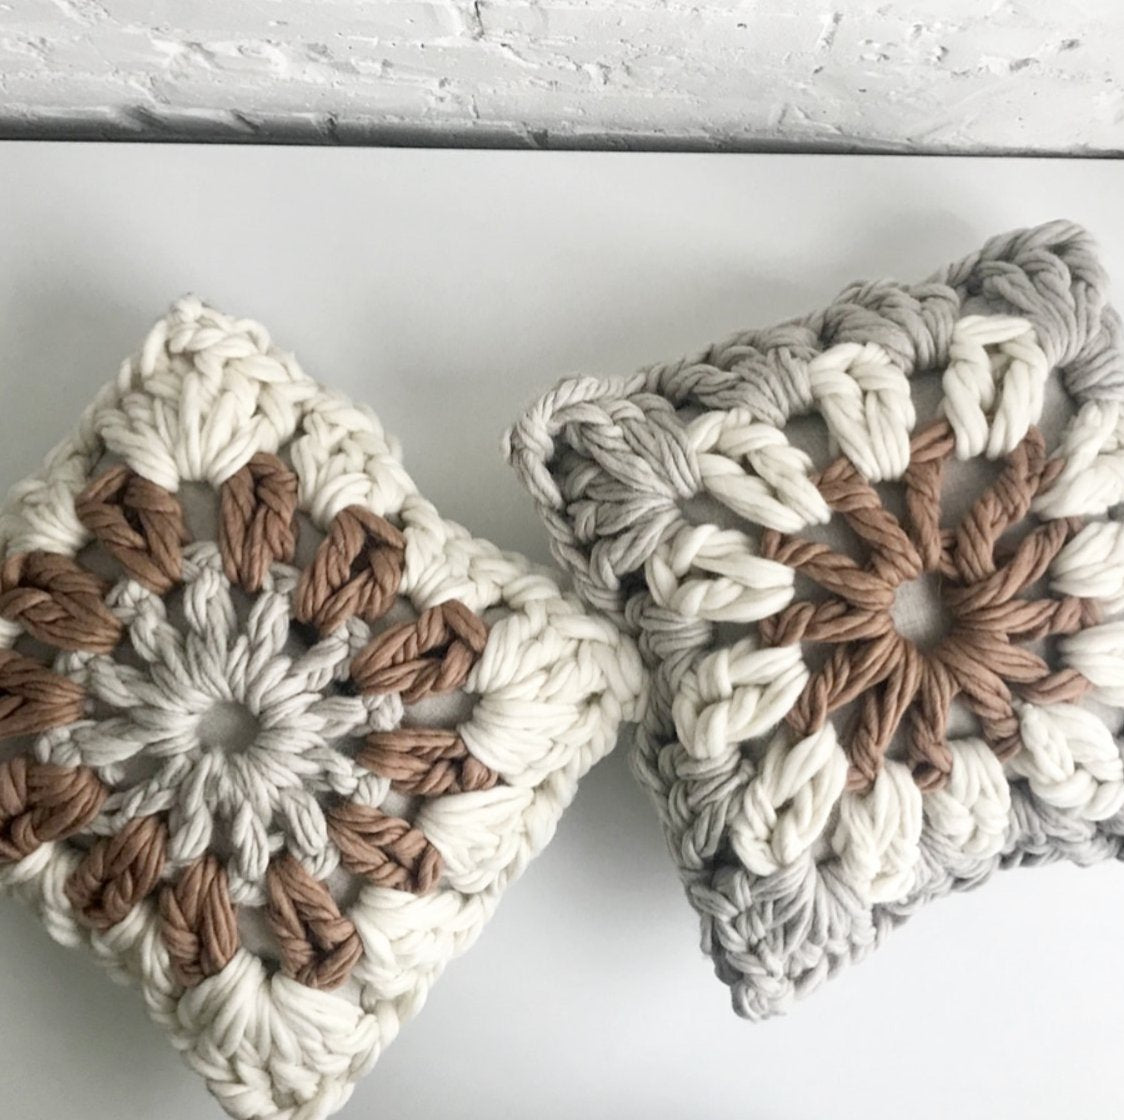 Crochet Series #2 - 12 Granny Square Pillow Tutorial 